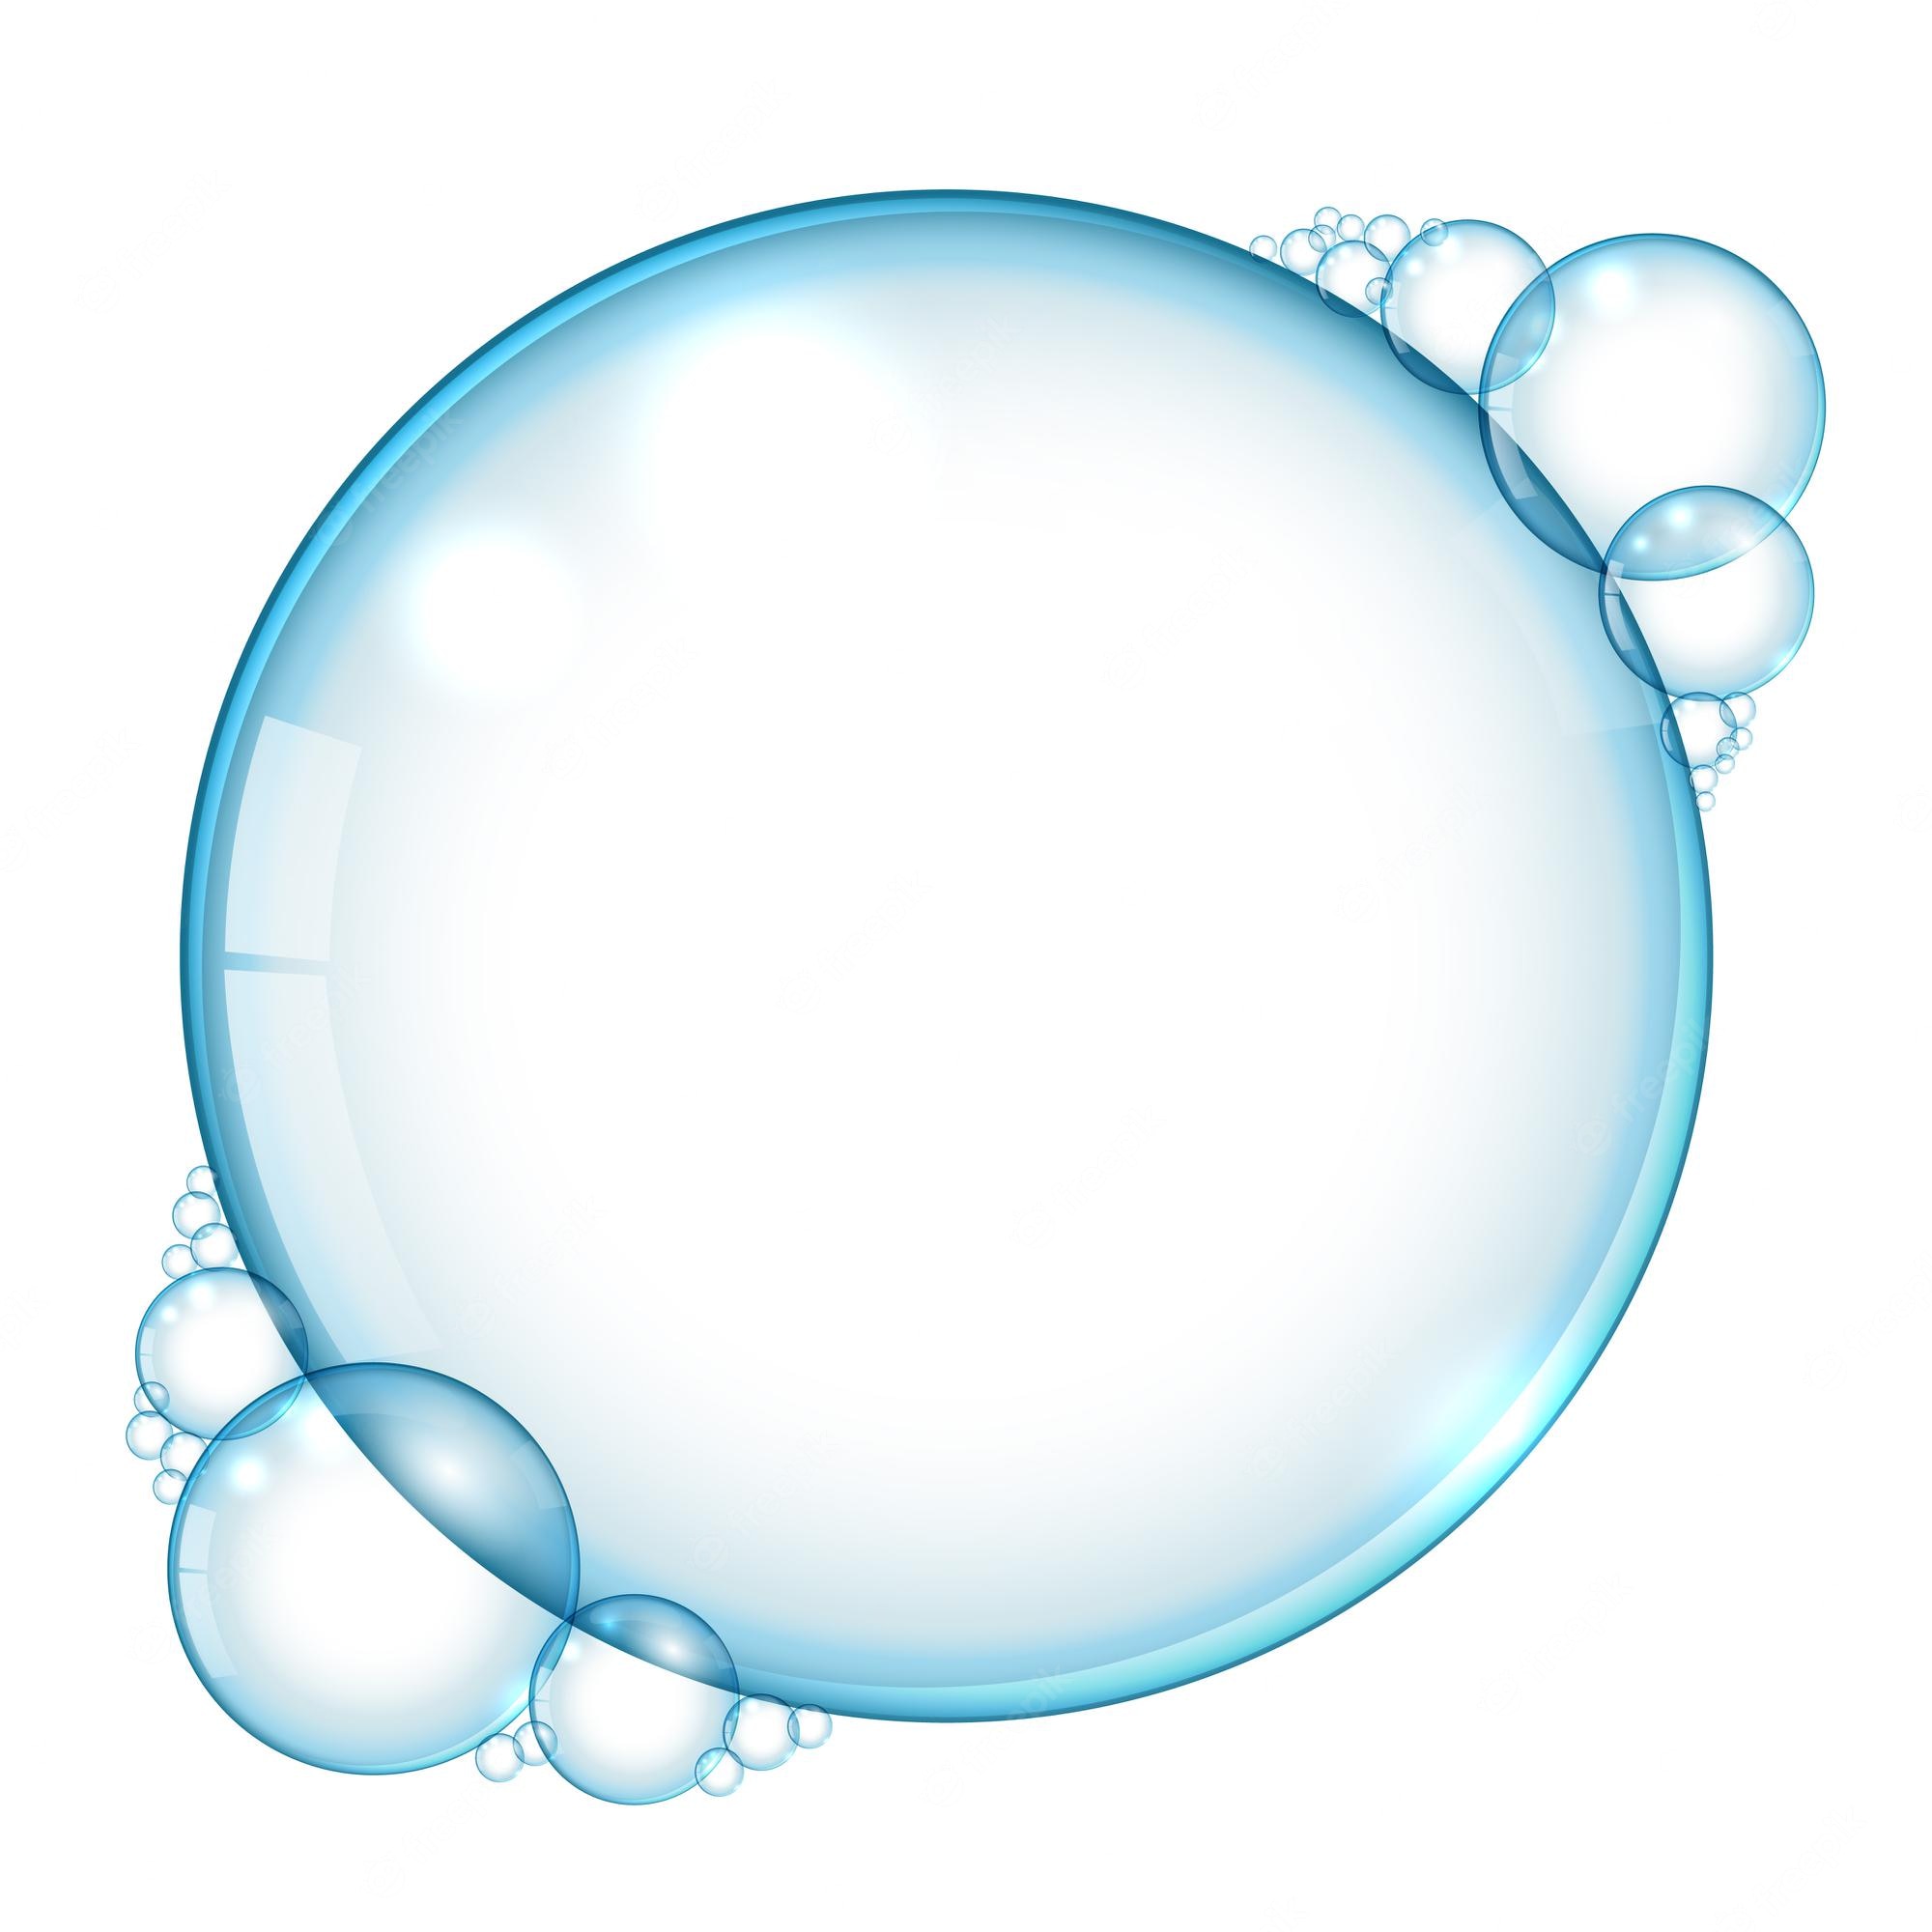 Water Soap Bubble PNG Image, Soap Bubbles In Blue Sea Water - Clip Art ...